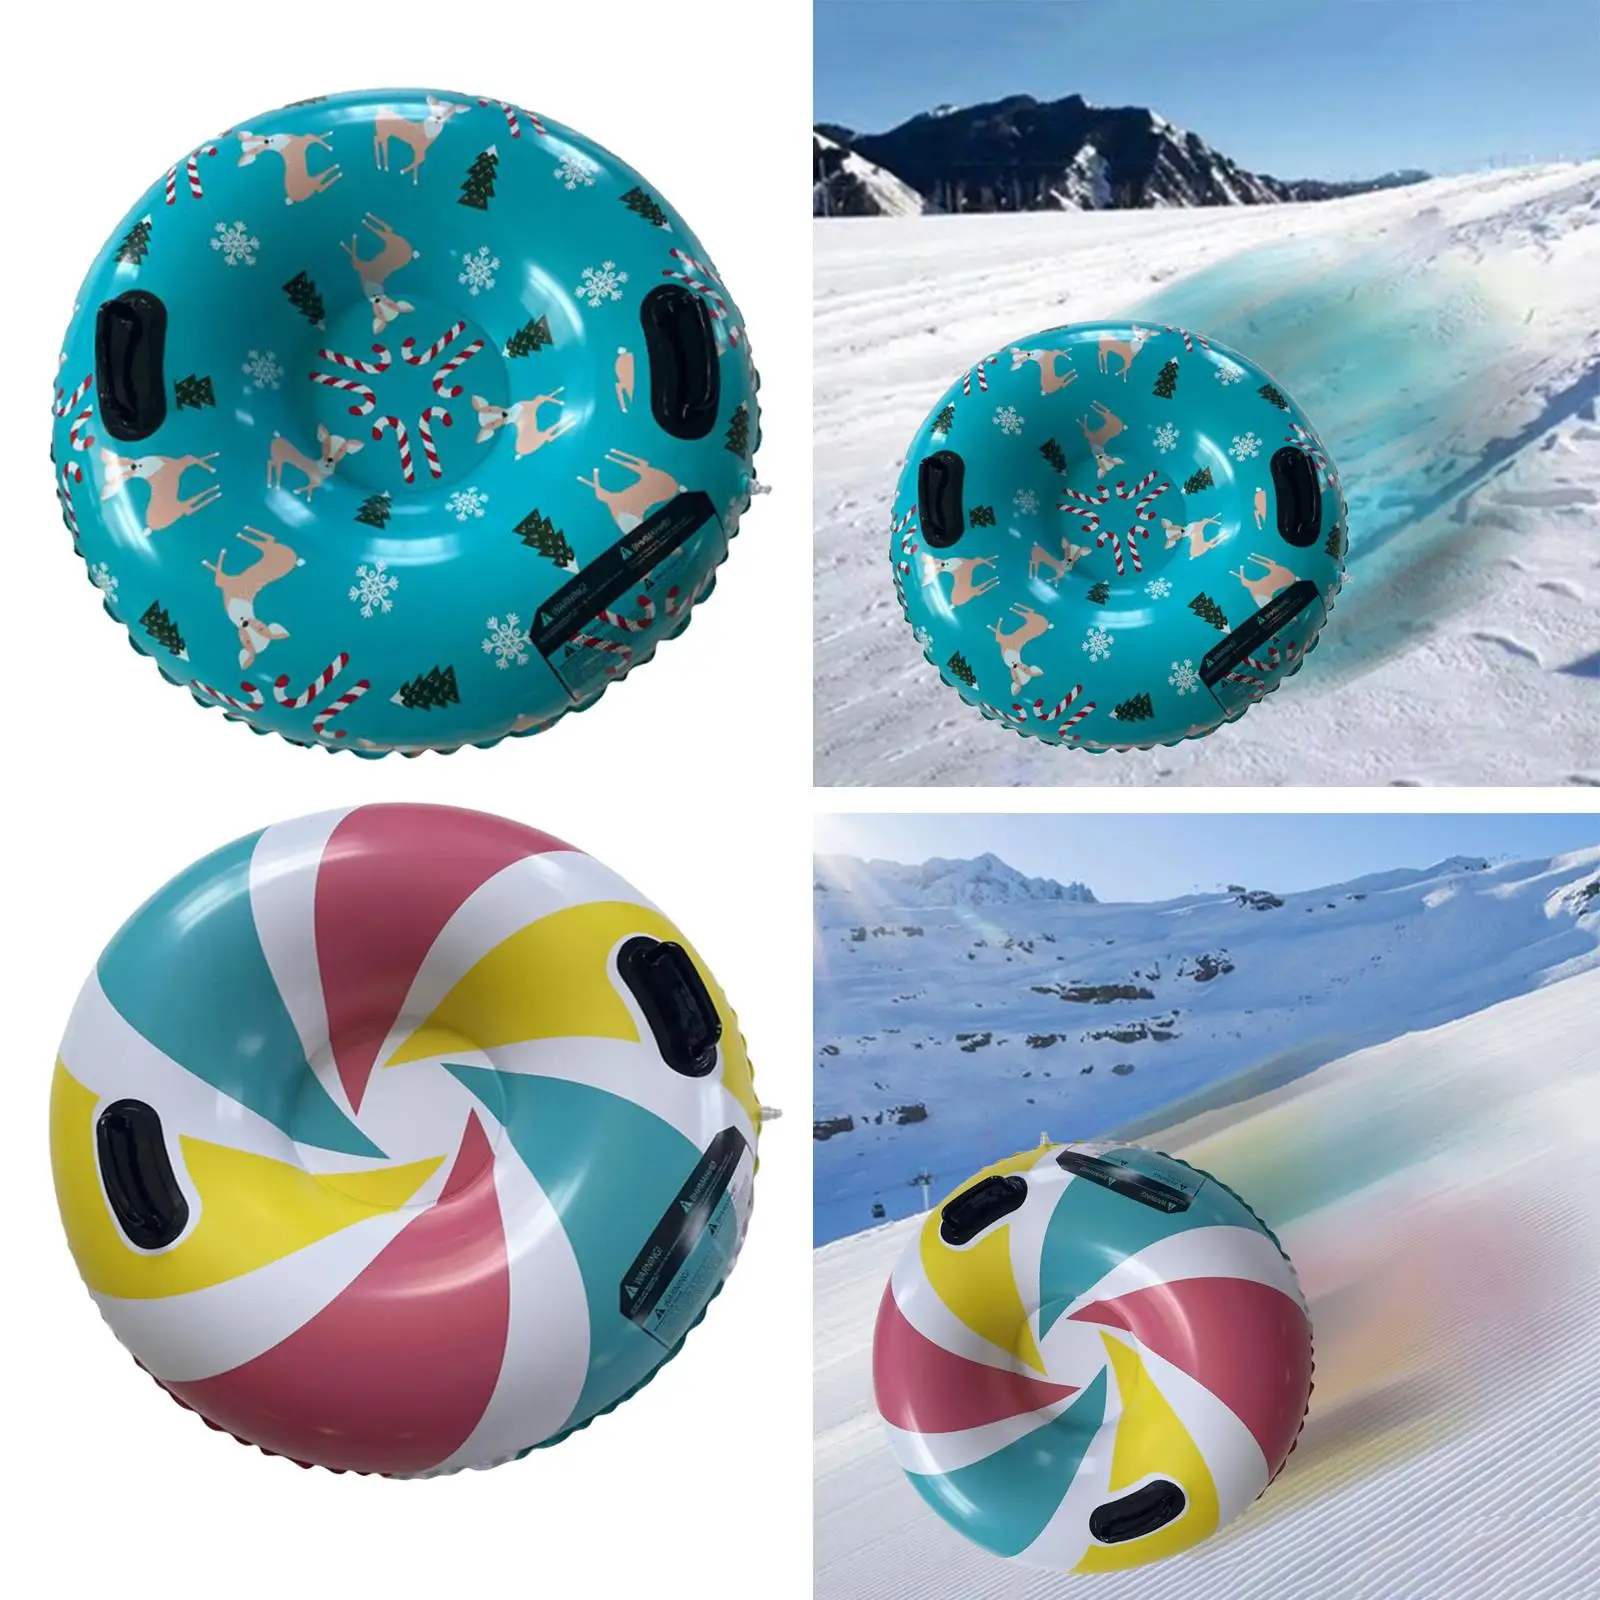 Winter Snow Tube 91cm Sleigh Inflatable Snow Sled for Backyard Children Skiing Sports